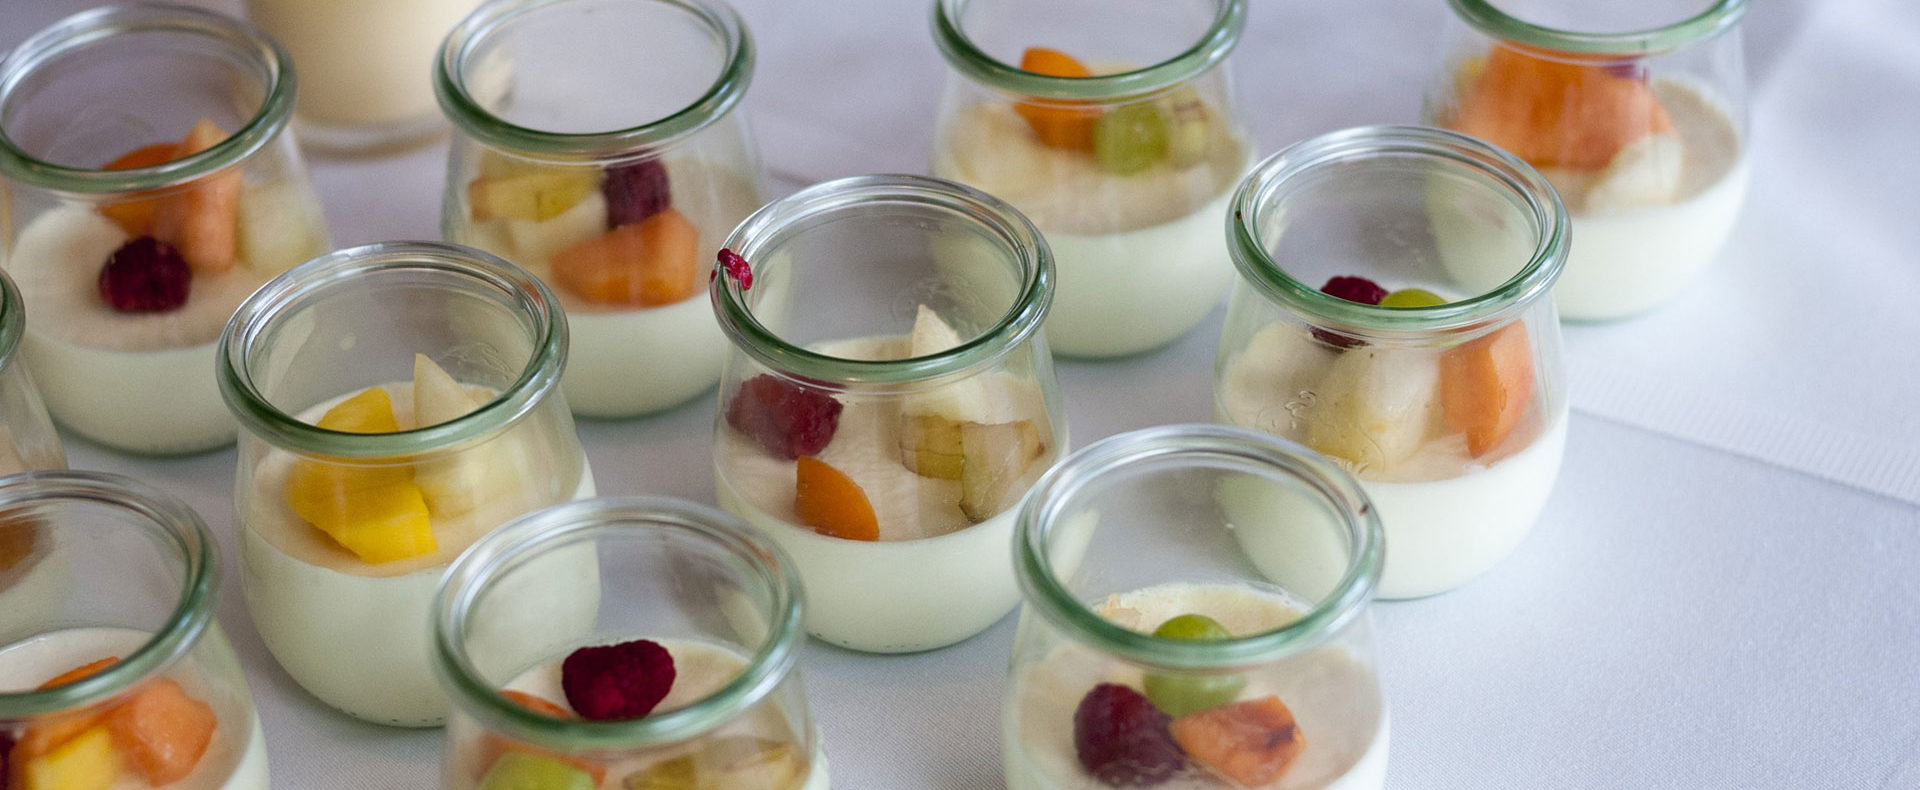 Catering / Partyservice - Joghurt-Dessert mit Früchten am Buffet